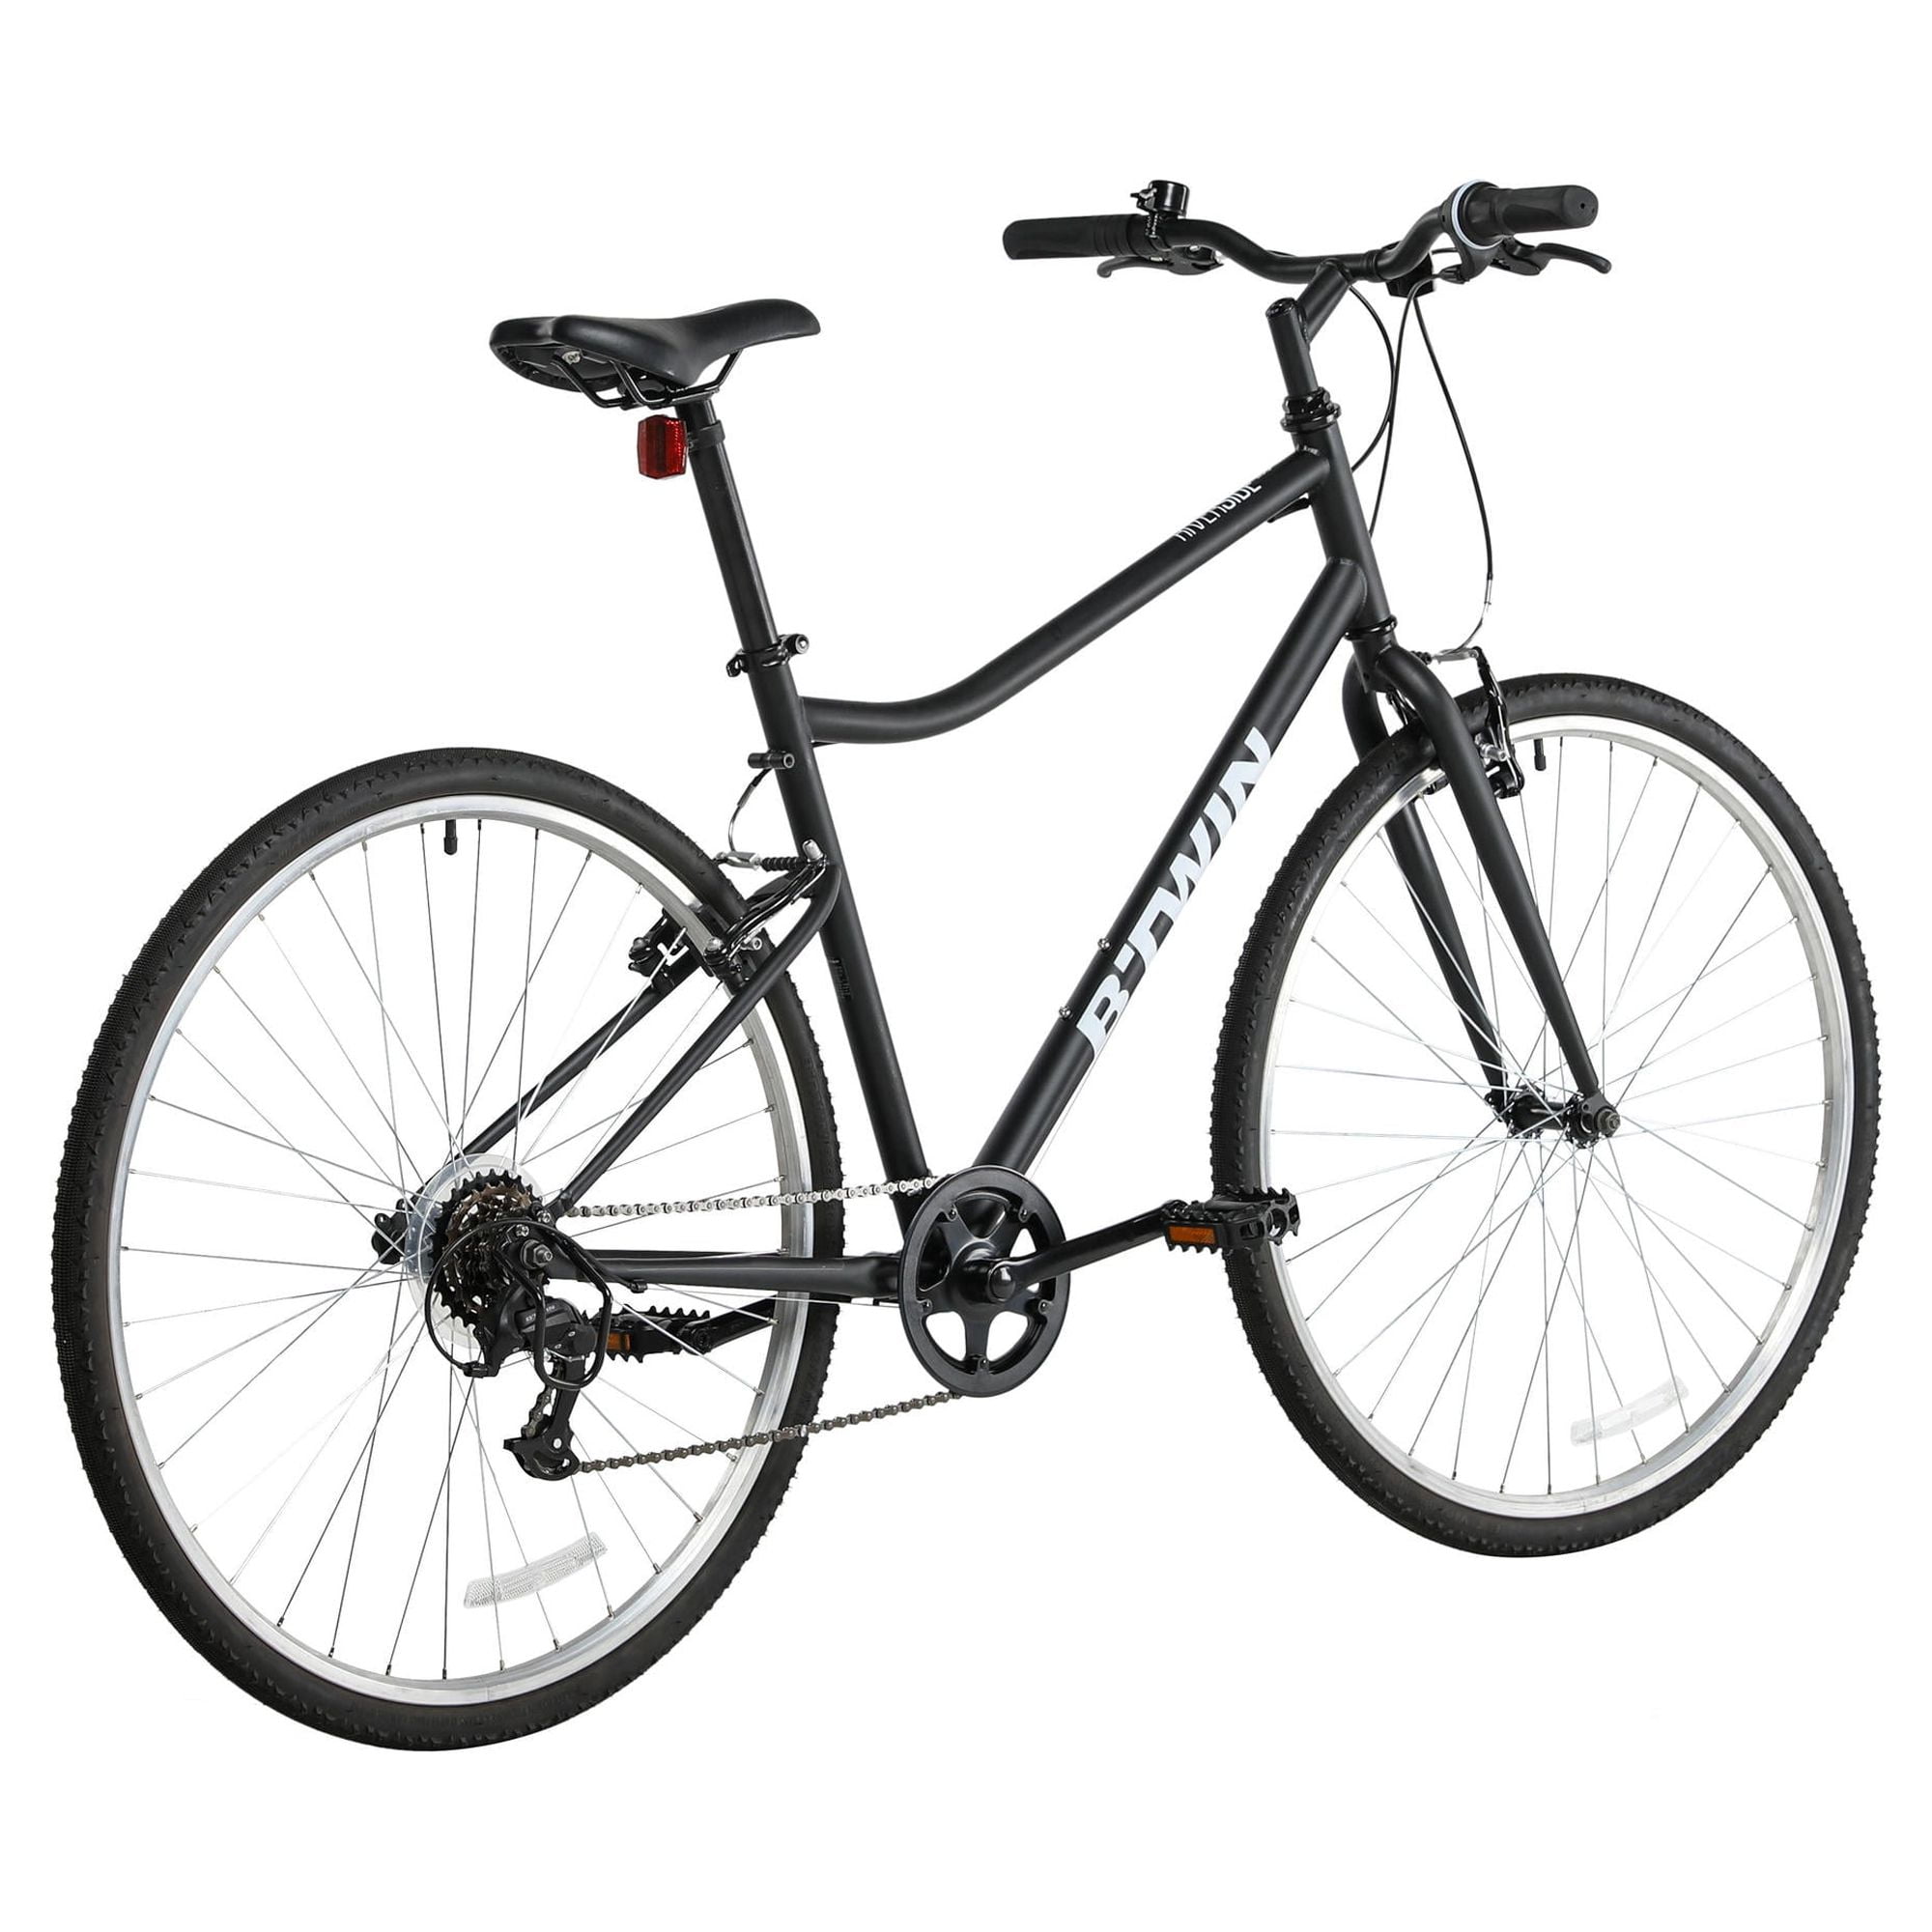 Decathlon Riverside 100, 6-Speed Adult Hybrid Bike, Black 